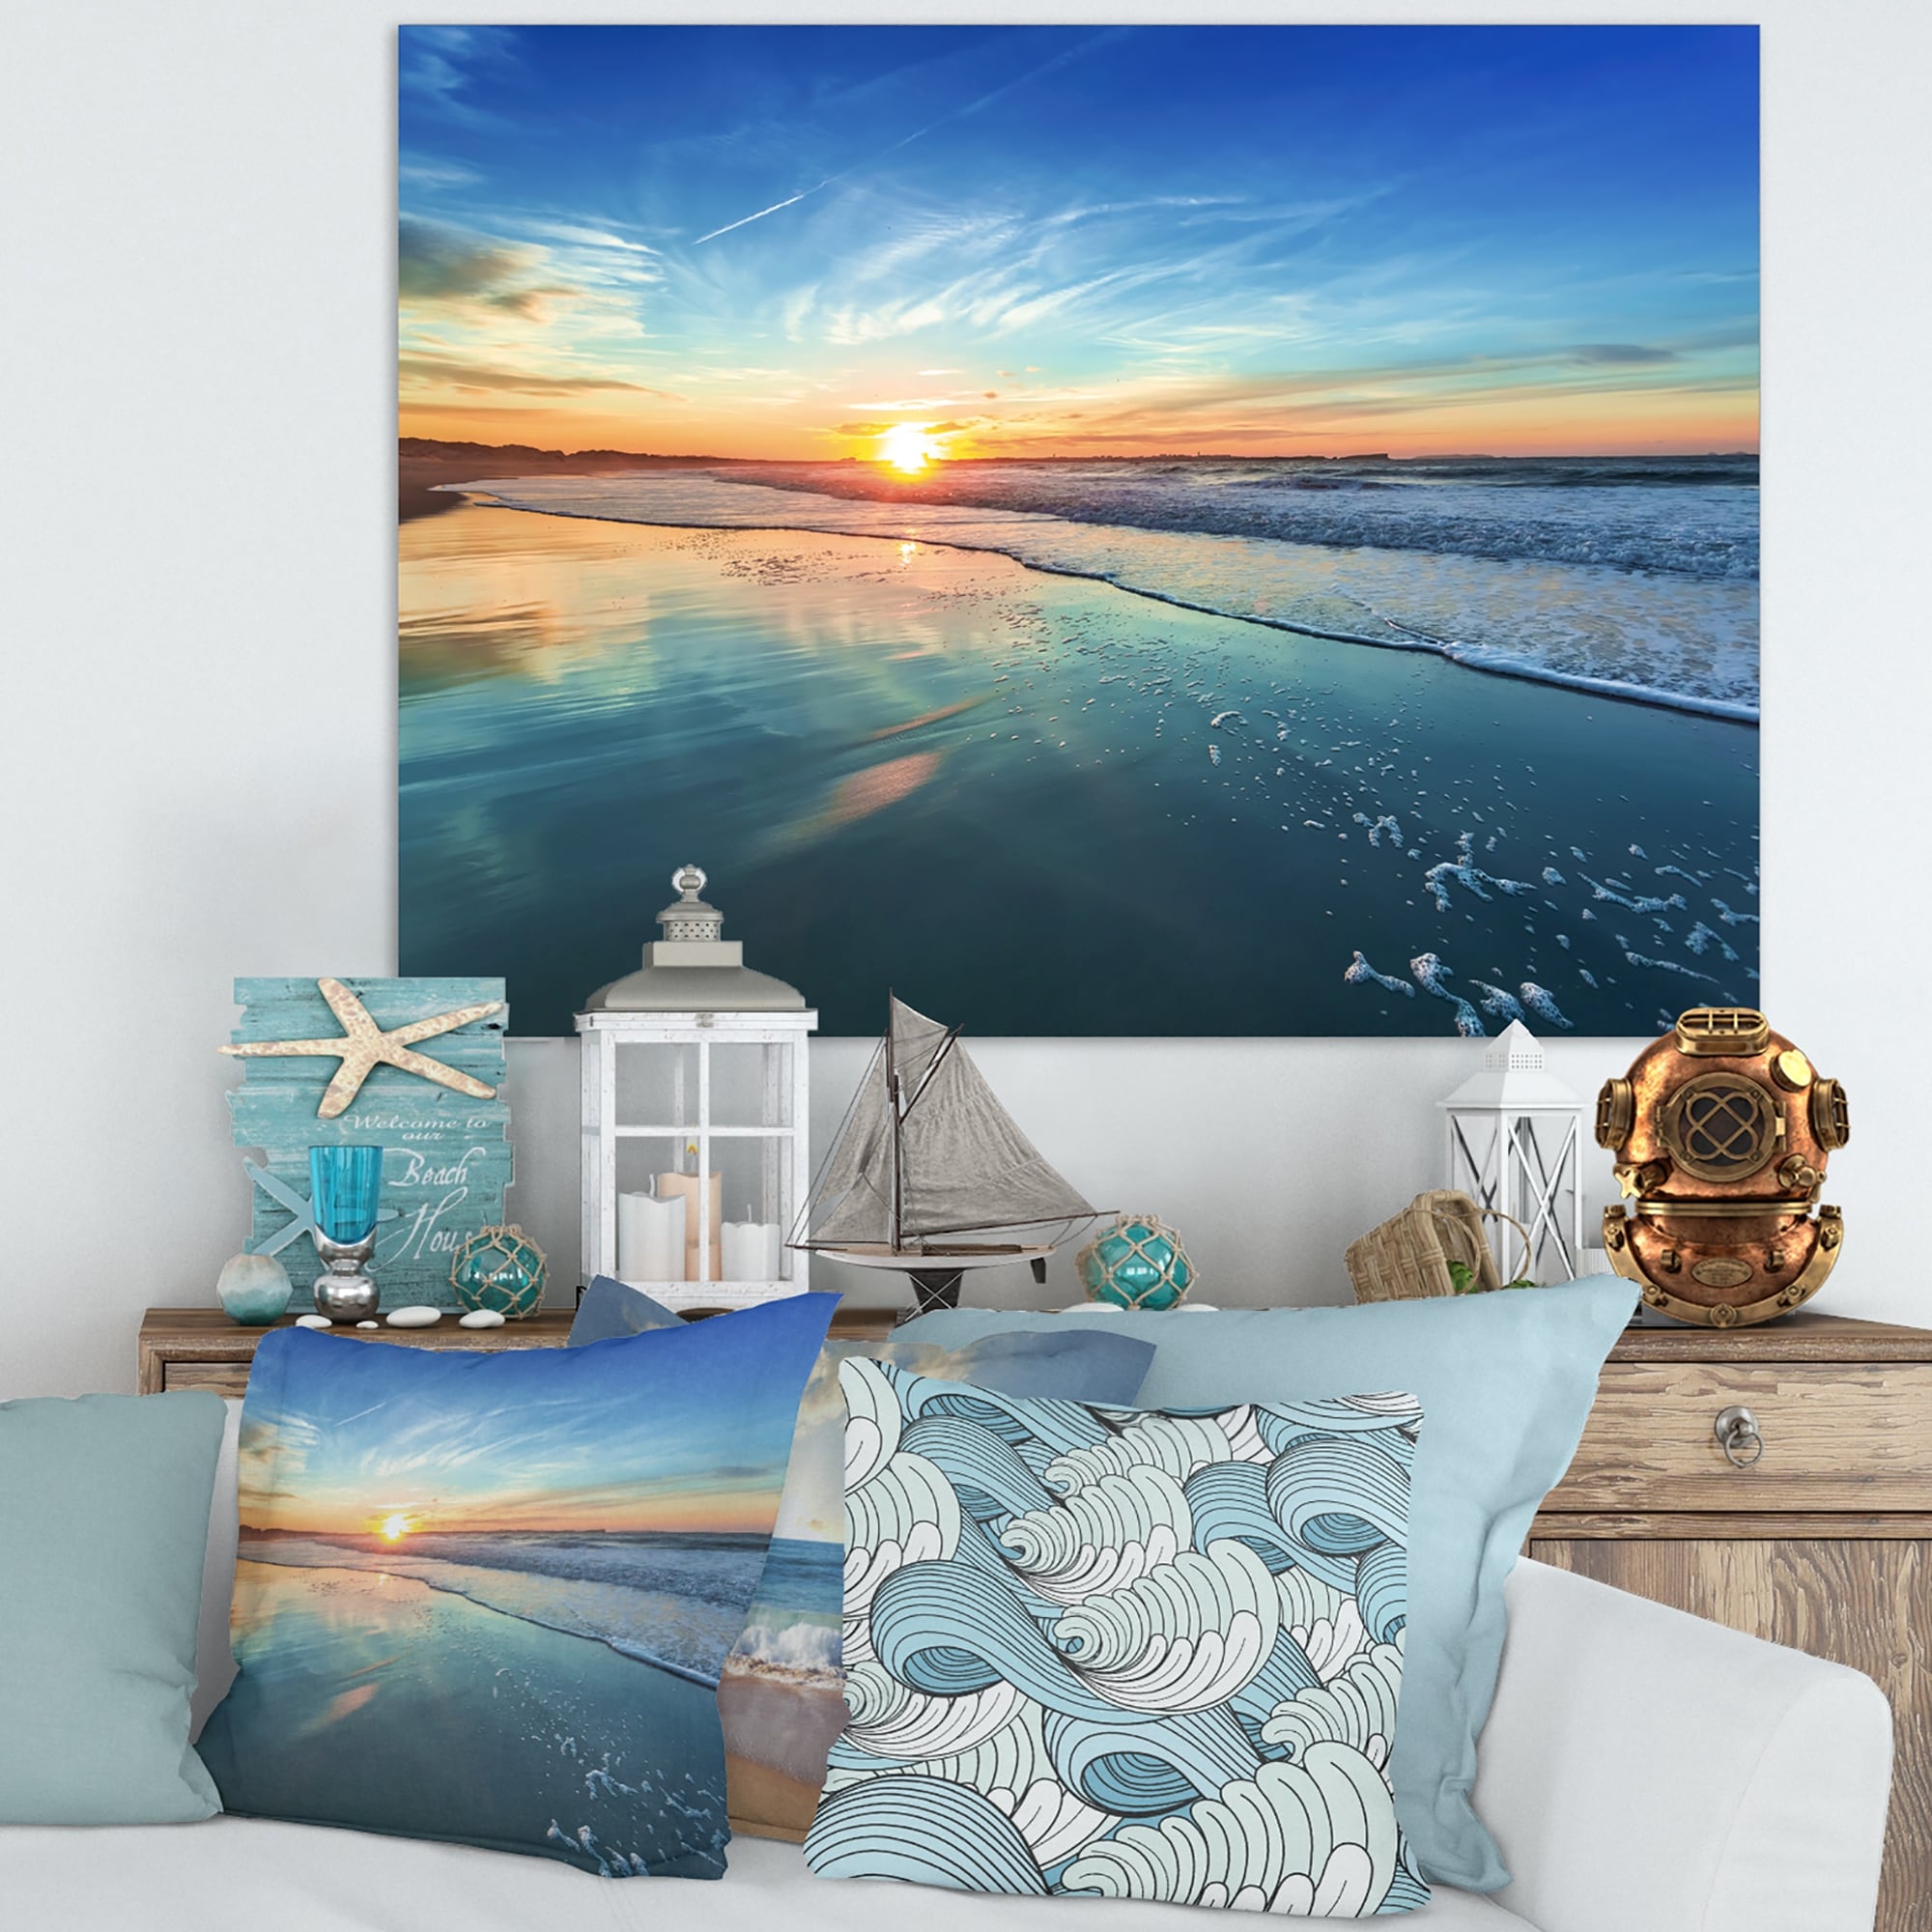 Island Blue Sunset Seascape SINGLE CANVAS WALL ART Picture Print 